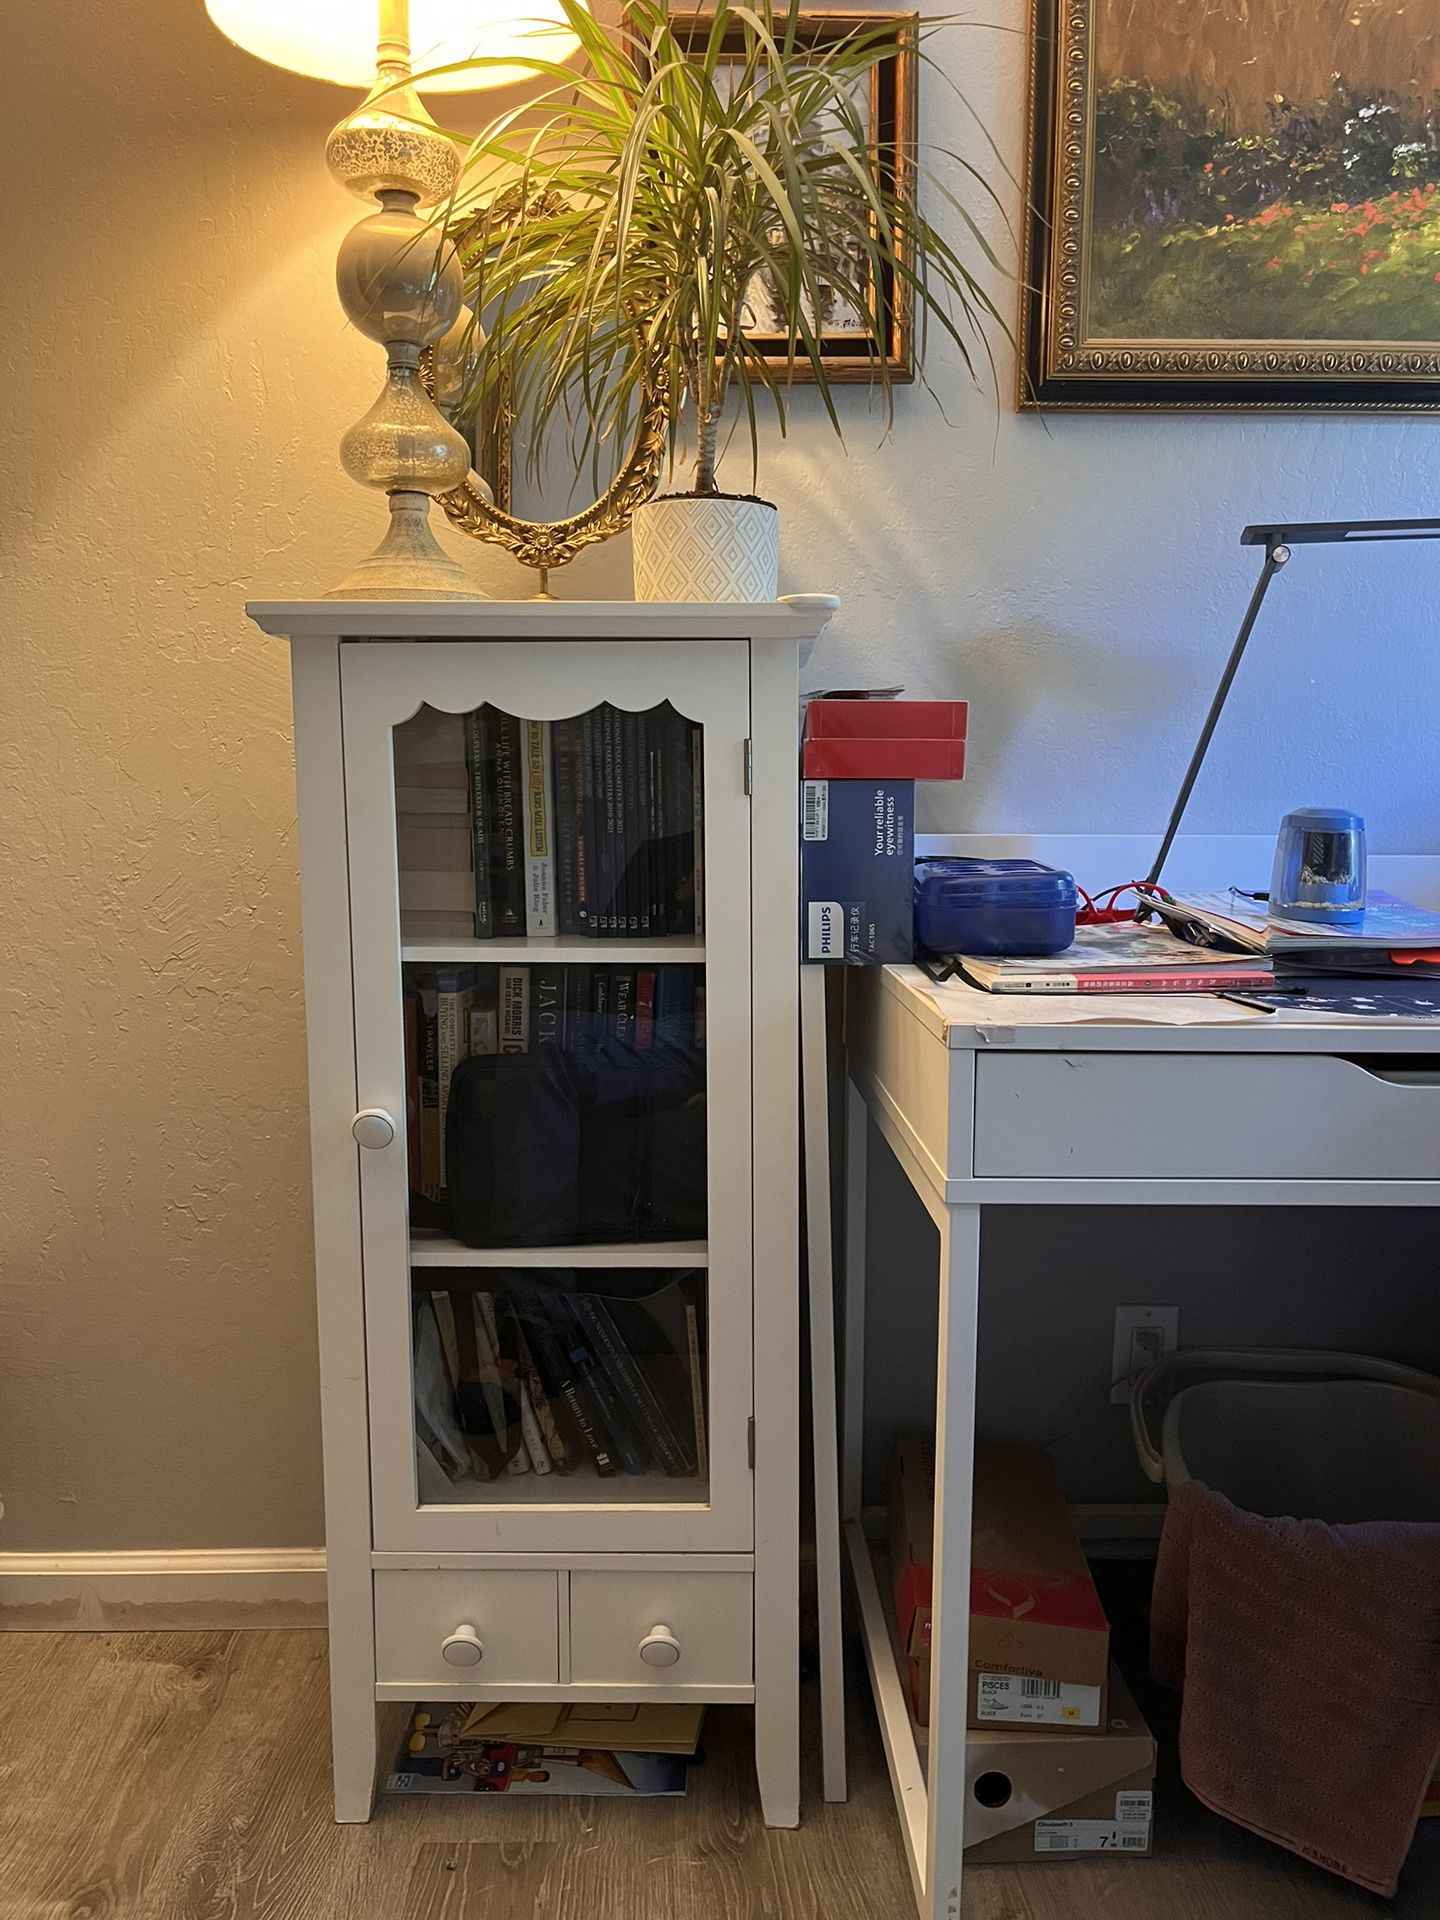 Cabinet Or Book Shelf